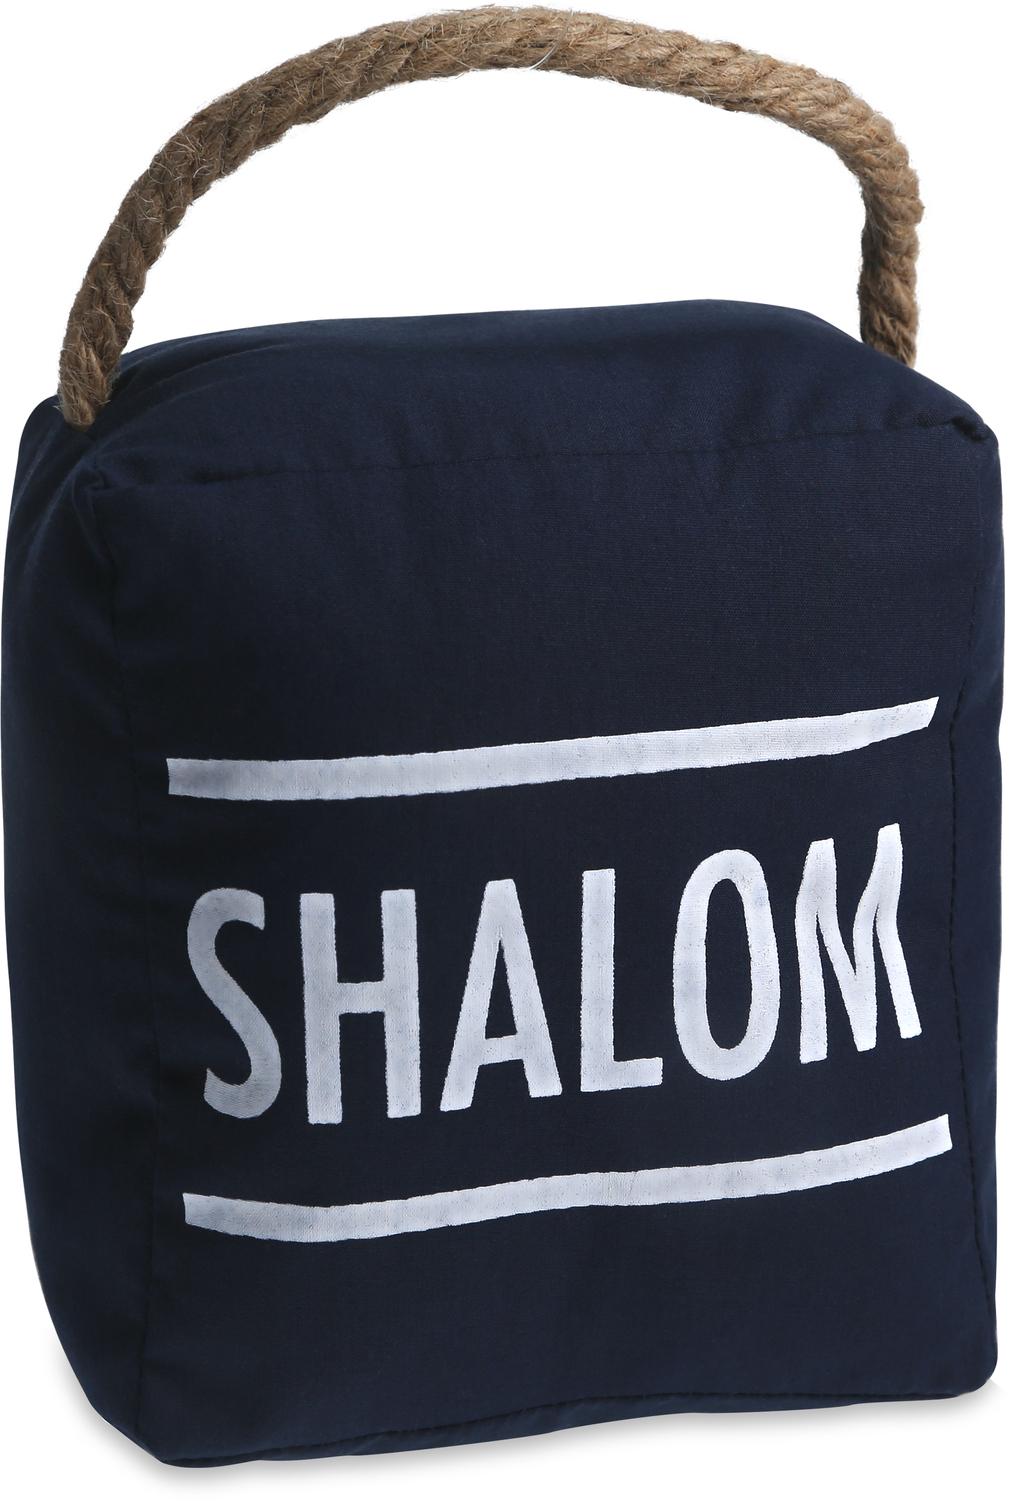 Shalom by Open Door Decor - Shalom - 5" x 6" Door Stopper